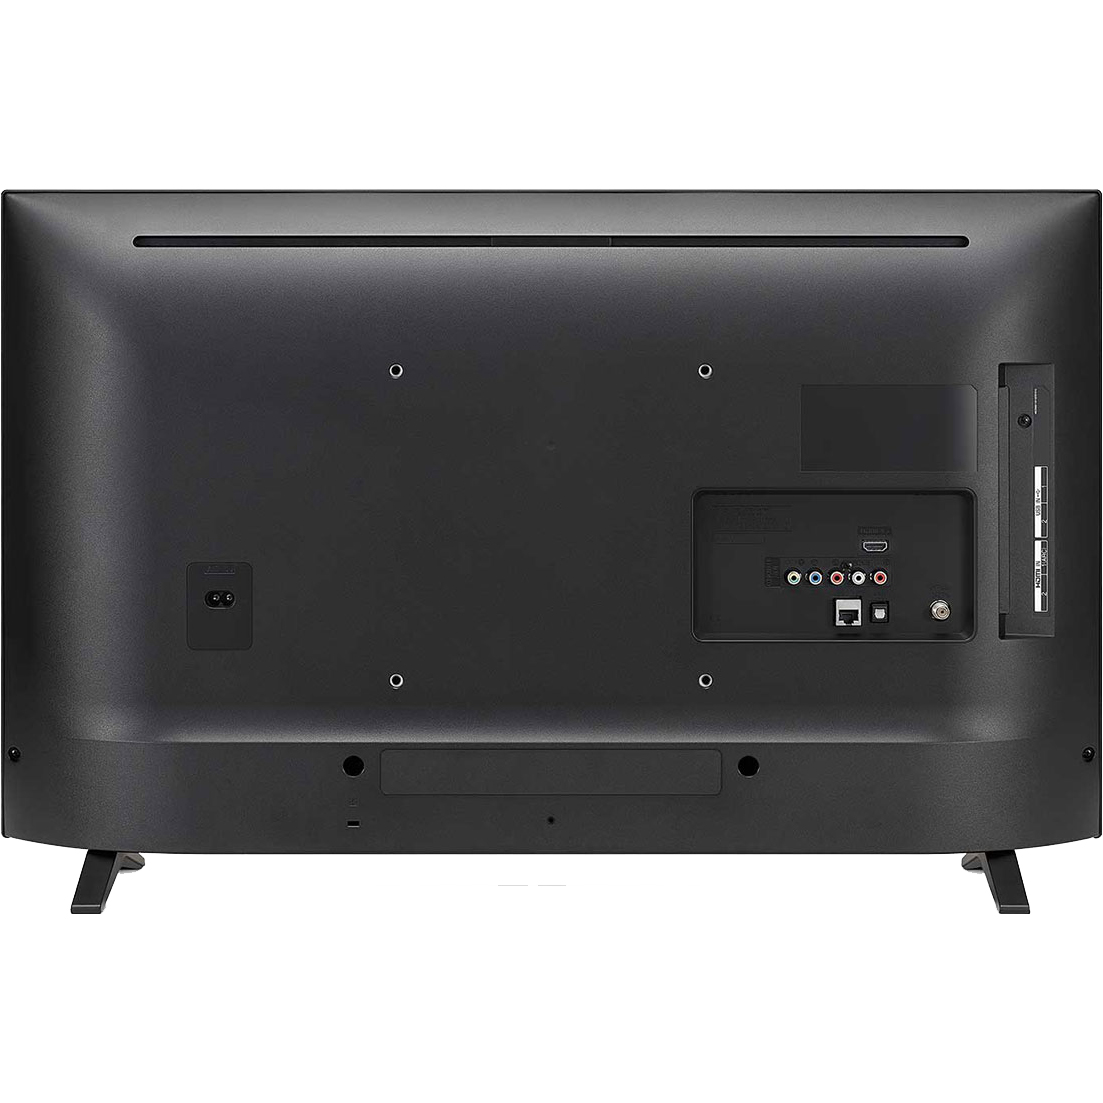 Телевизор LG 32LM6350, цвет черный - фото 5